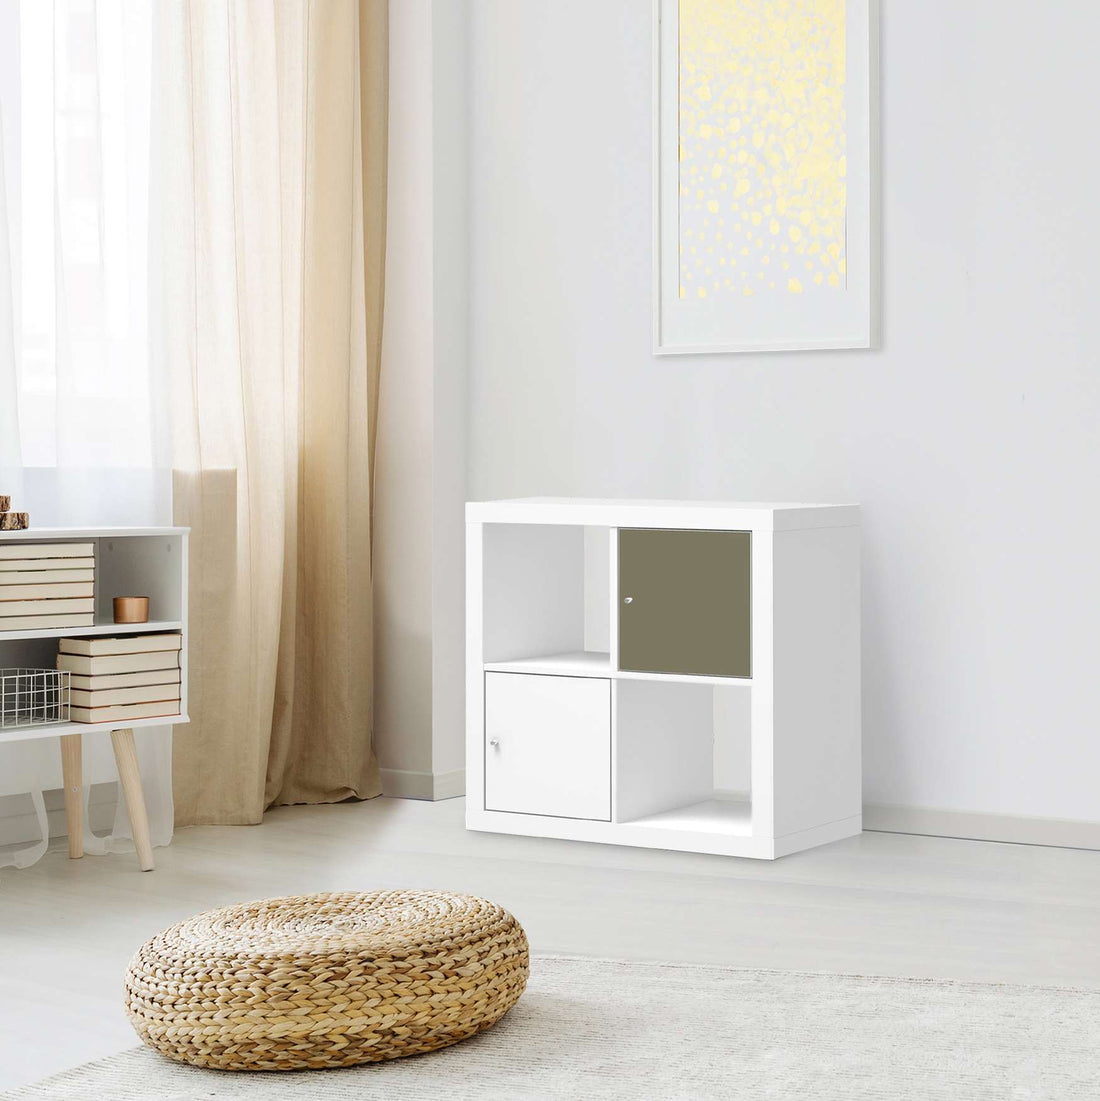 Selbstklebende Folie Braungrau Light - IKEA Kallax Regal 1 Türe - Wohnzimmer